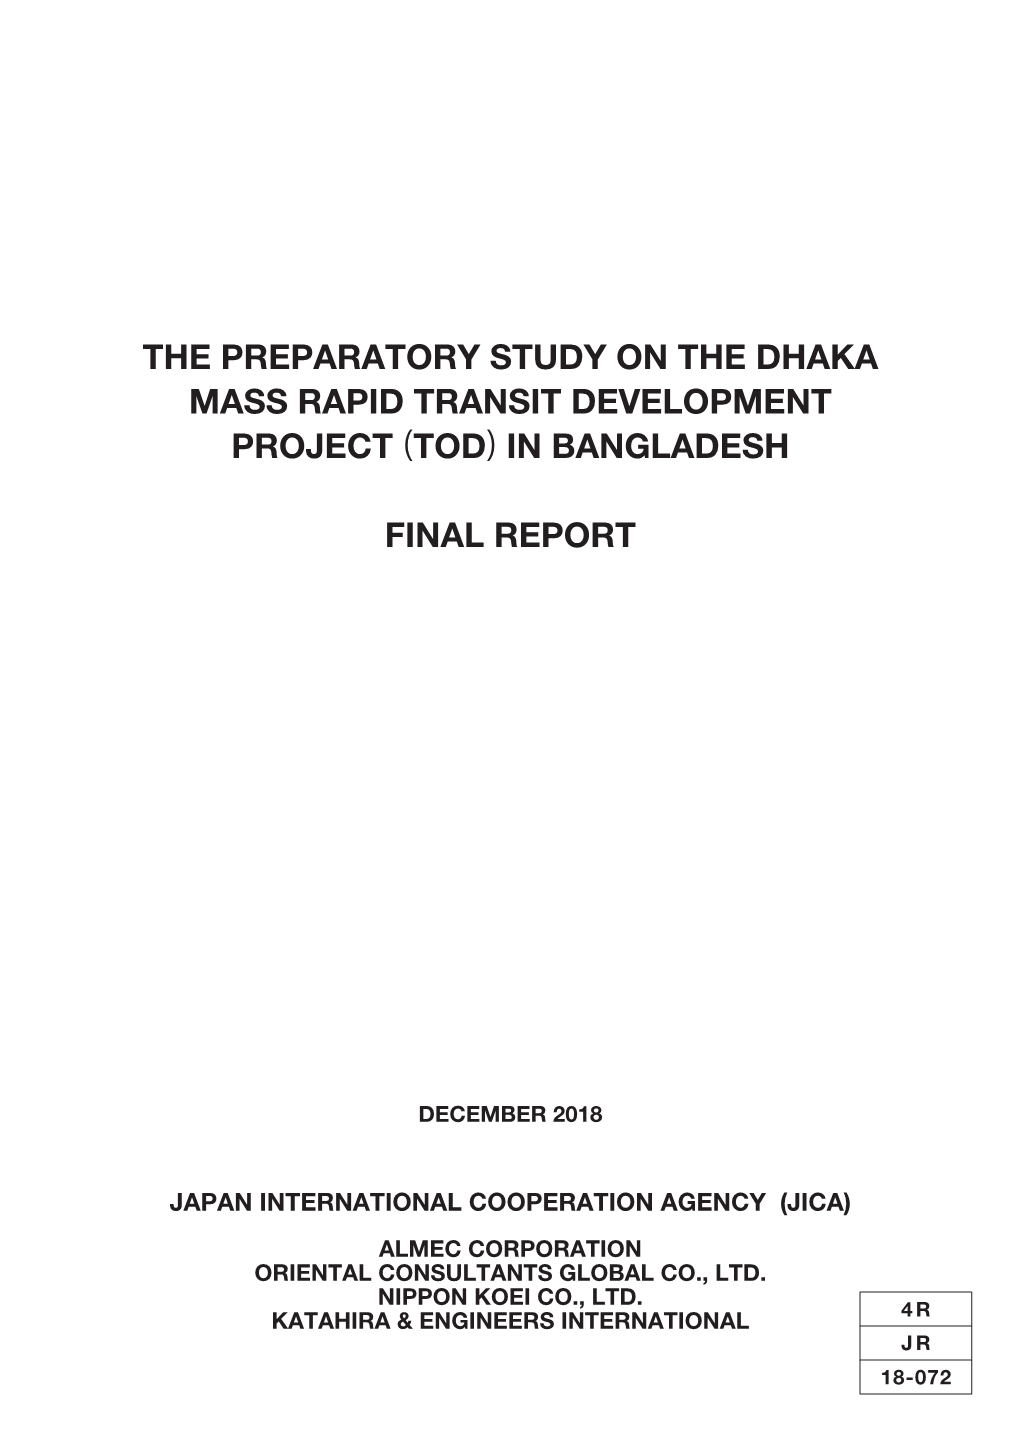 The Preparatory Study on the Dhaka Mass Rapid Transit Development Project (Tod) in Bangladesh